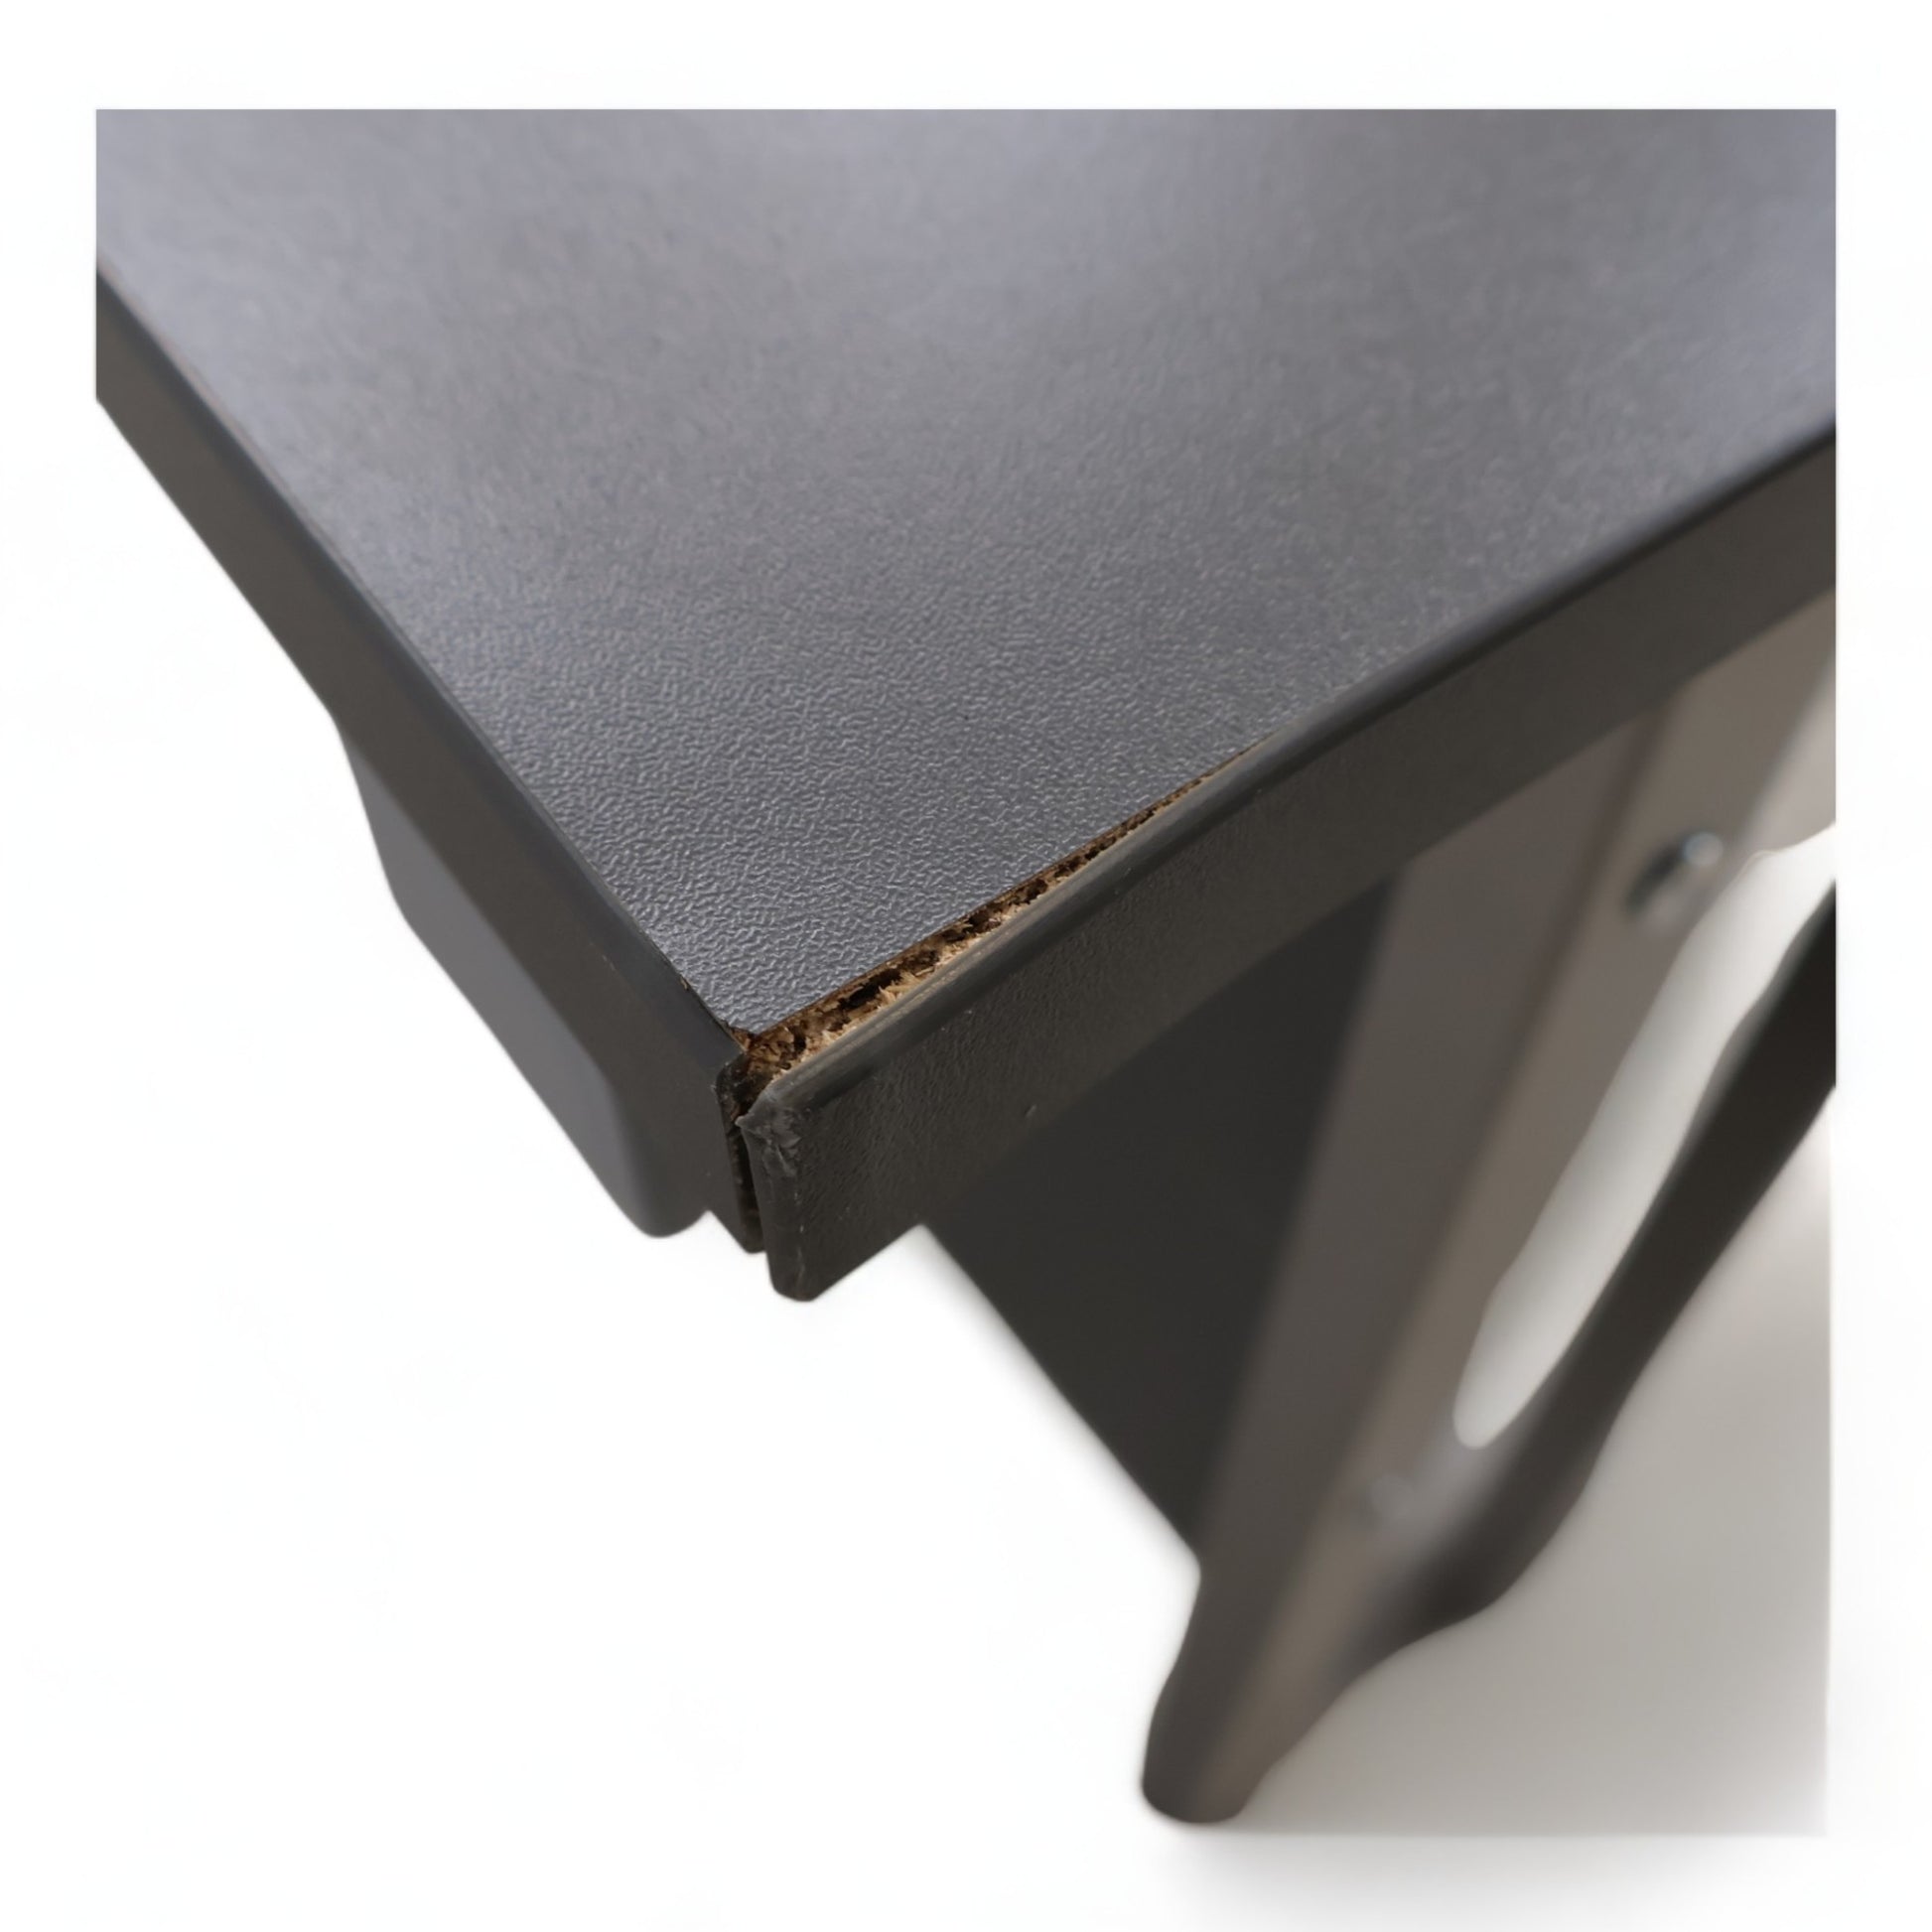 Kvalitetssikret | Flexus skrivebord fra AJ produkter, 120x80cm